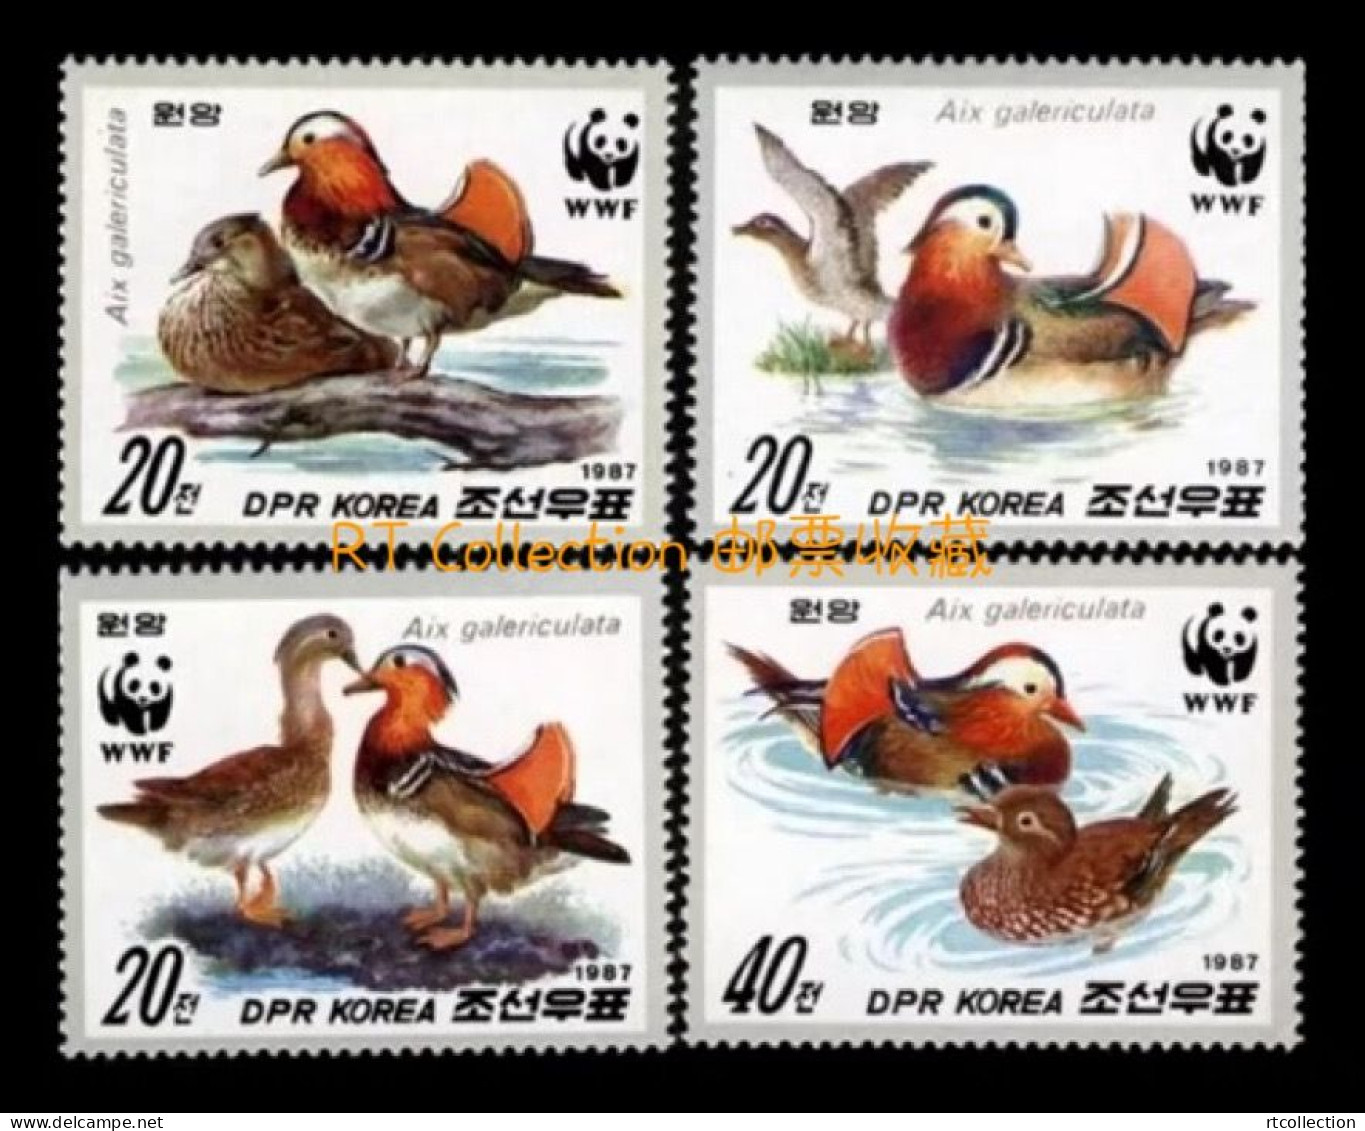 Korea 1987 World Nature Conservation Mandarin Ducks Duck WWF Fauna Animals Organizations W.W.F. Nature Stamps MNH - Entenvögel